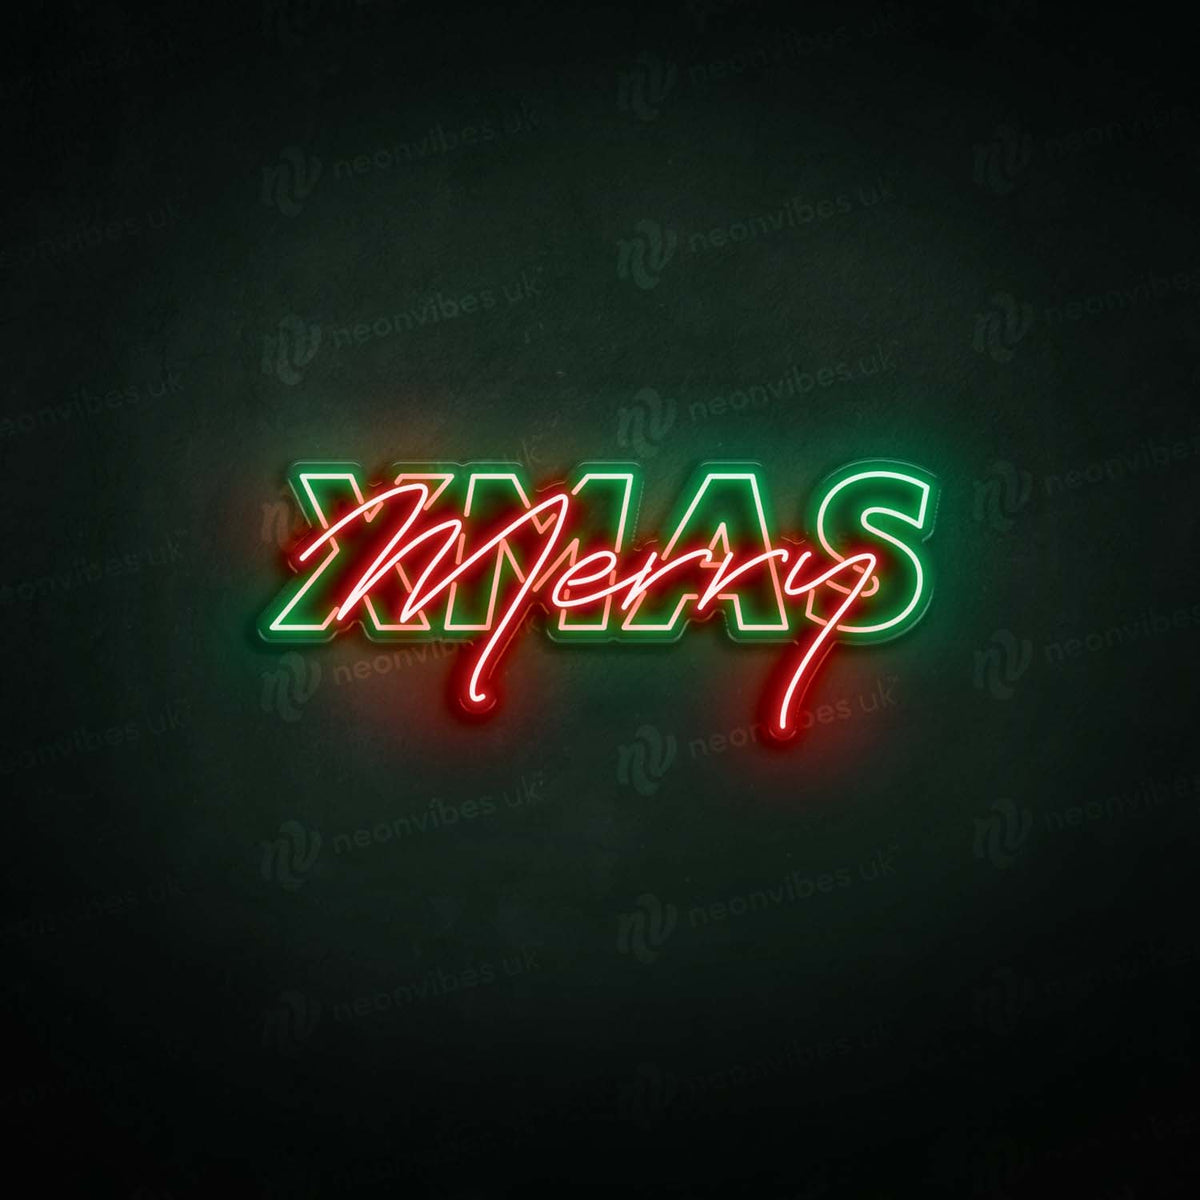 Merry Xmas neon sign